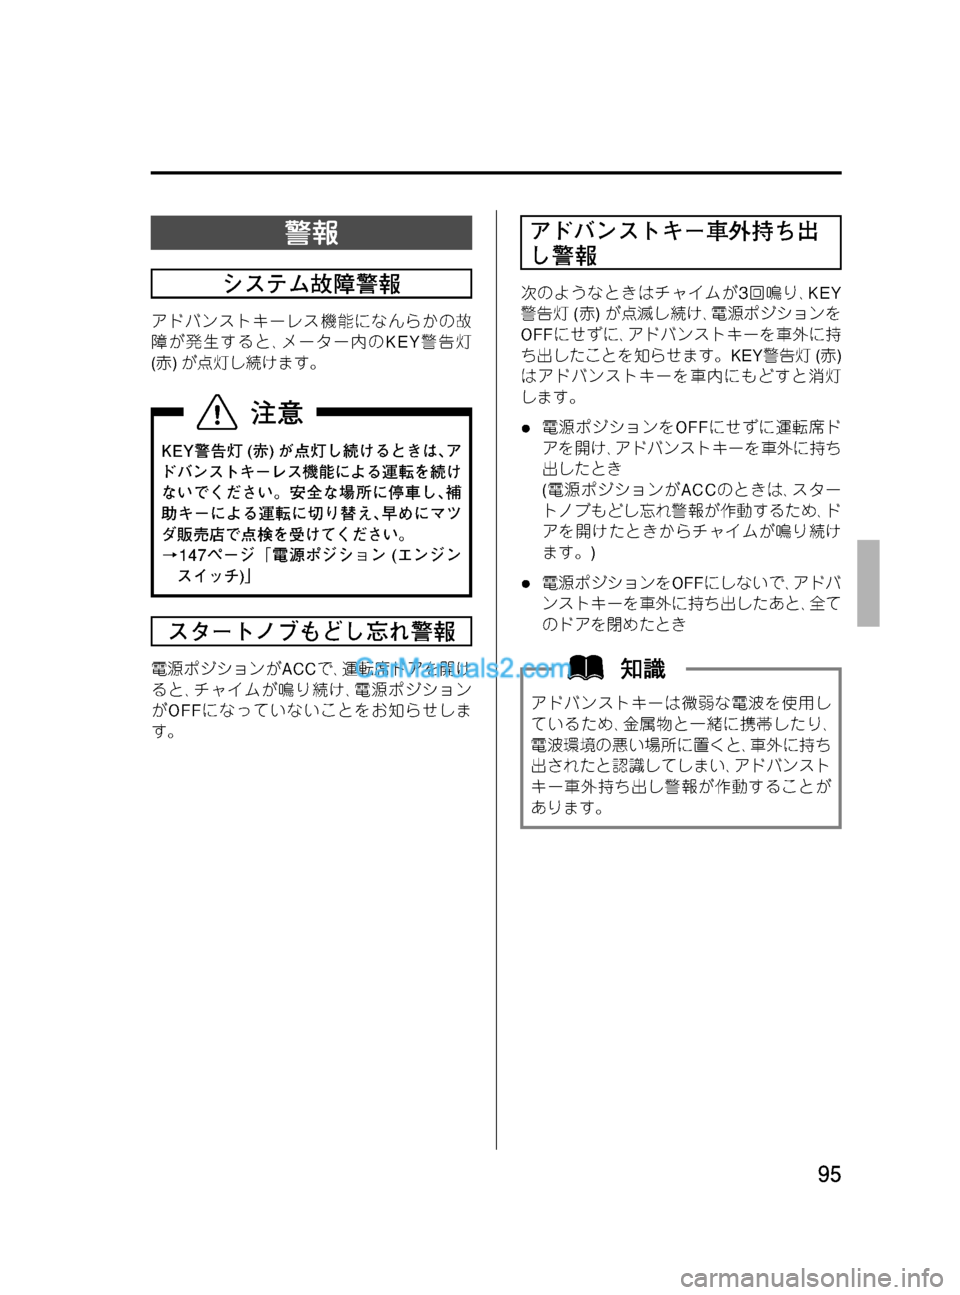 MAZDA MODEL VERISA 2007  ベリーサ｜取扱説明書 (in Japanese) Black plate (95,1)
警報
システム故障警報
アドバンストキーレス機能になんらかの故
障が発生すると､メーター内のKEY警告灯
(赤)が点灯し続けます。
KEY